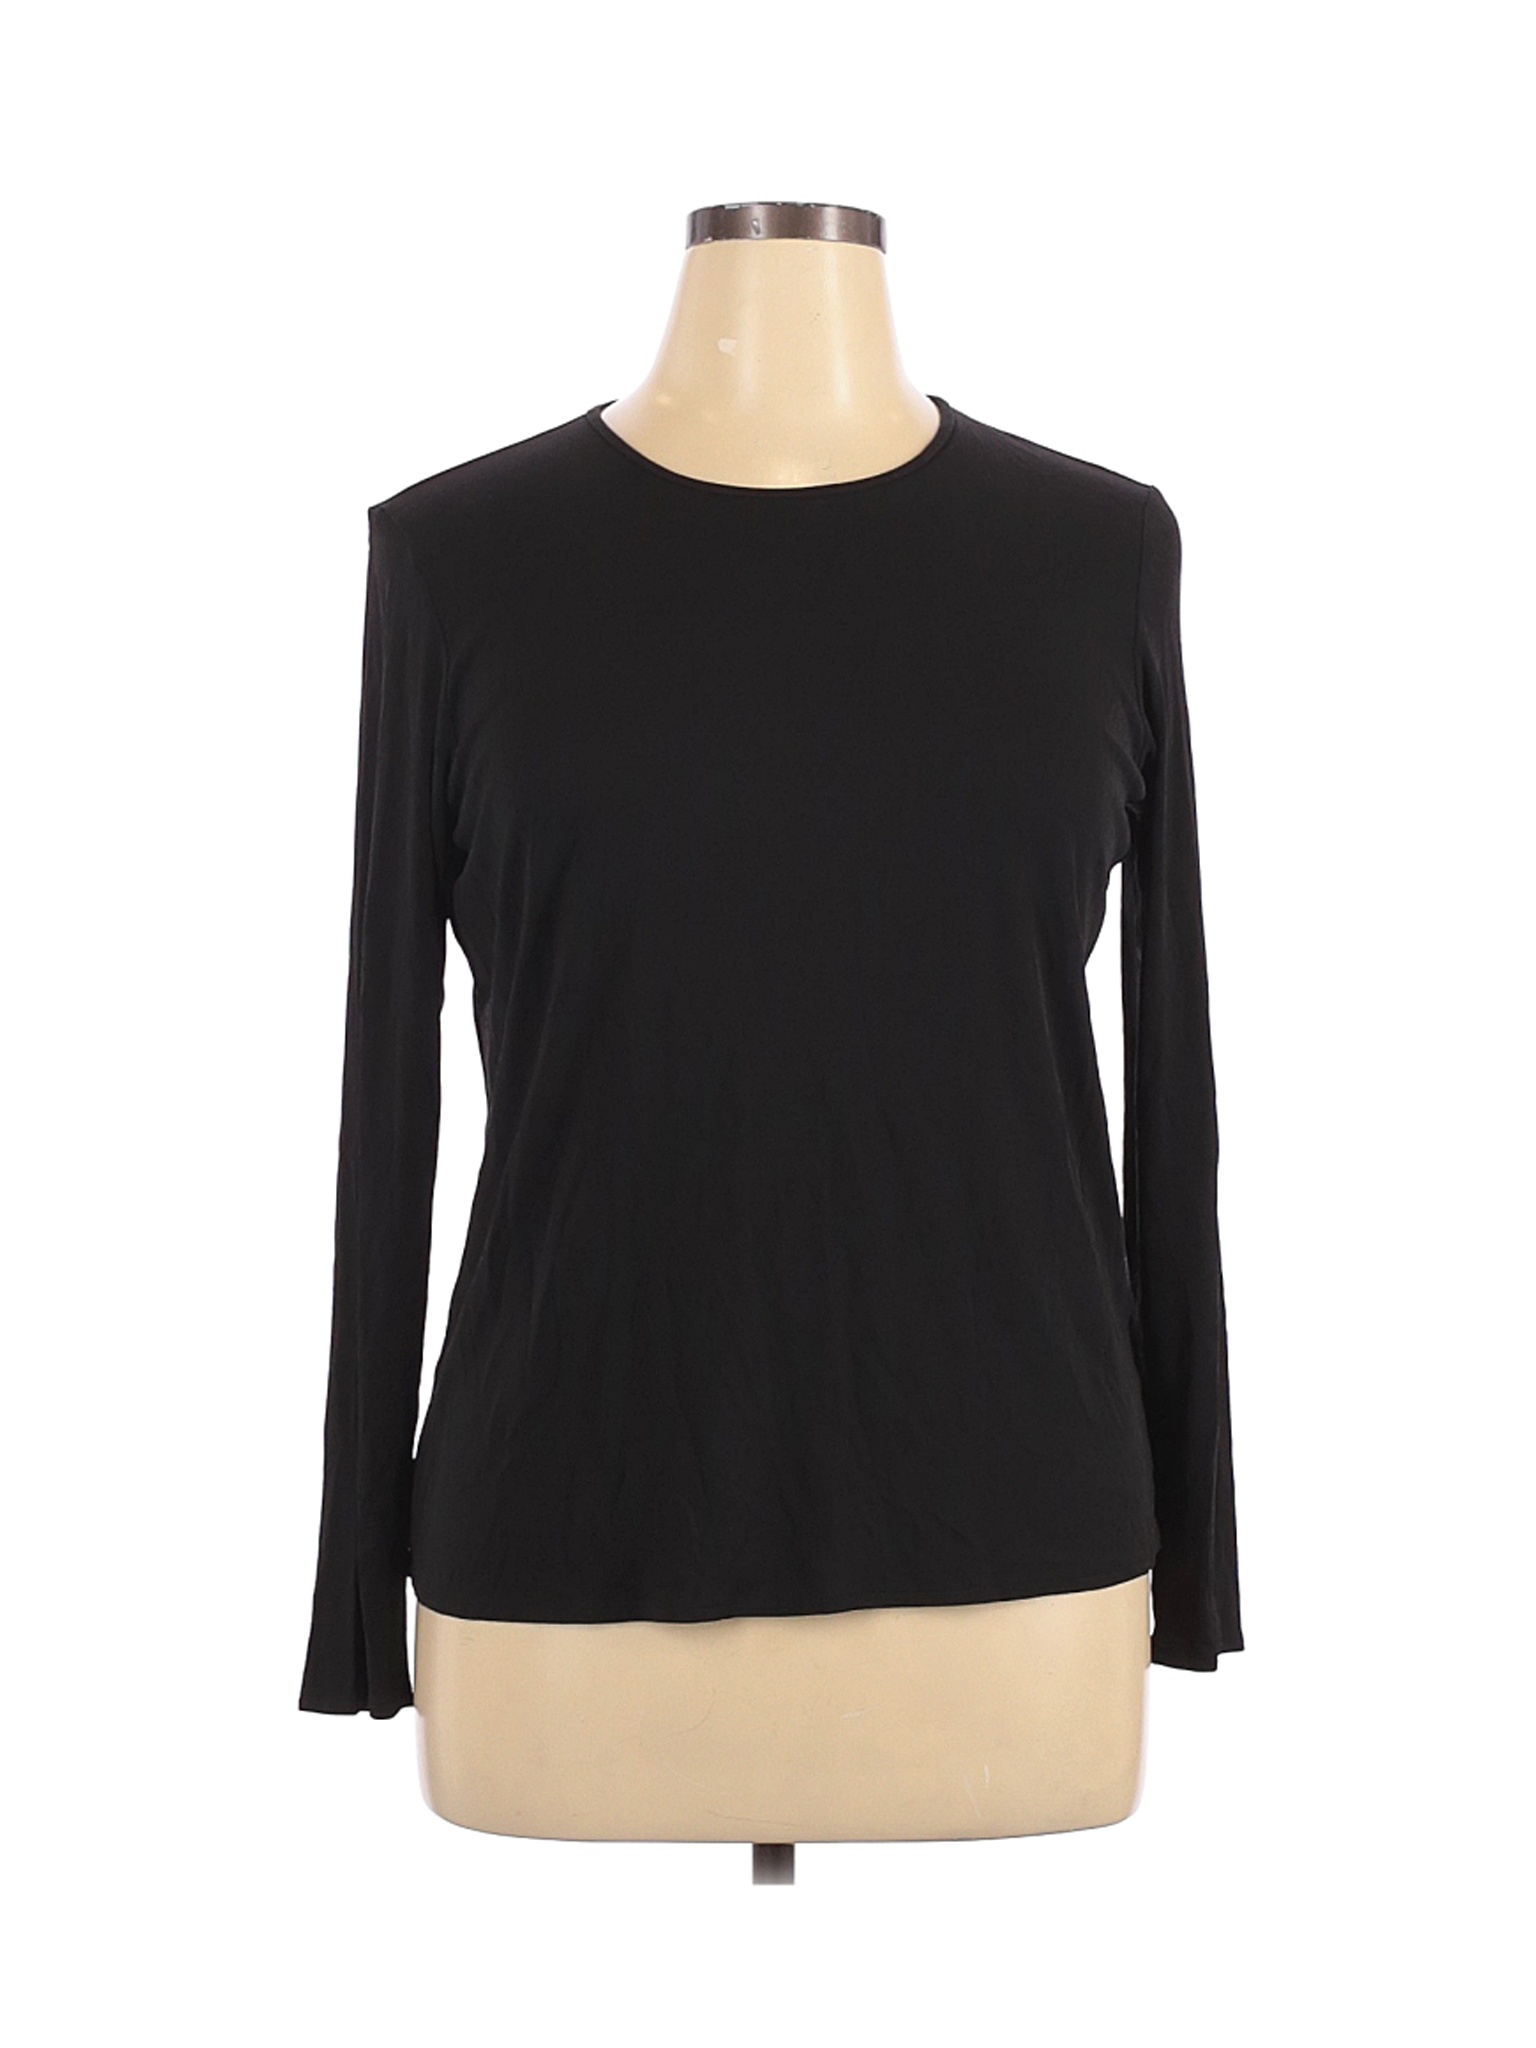 Eileen Fisher Women Black Long Sleeve Silk Top XL | eBay